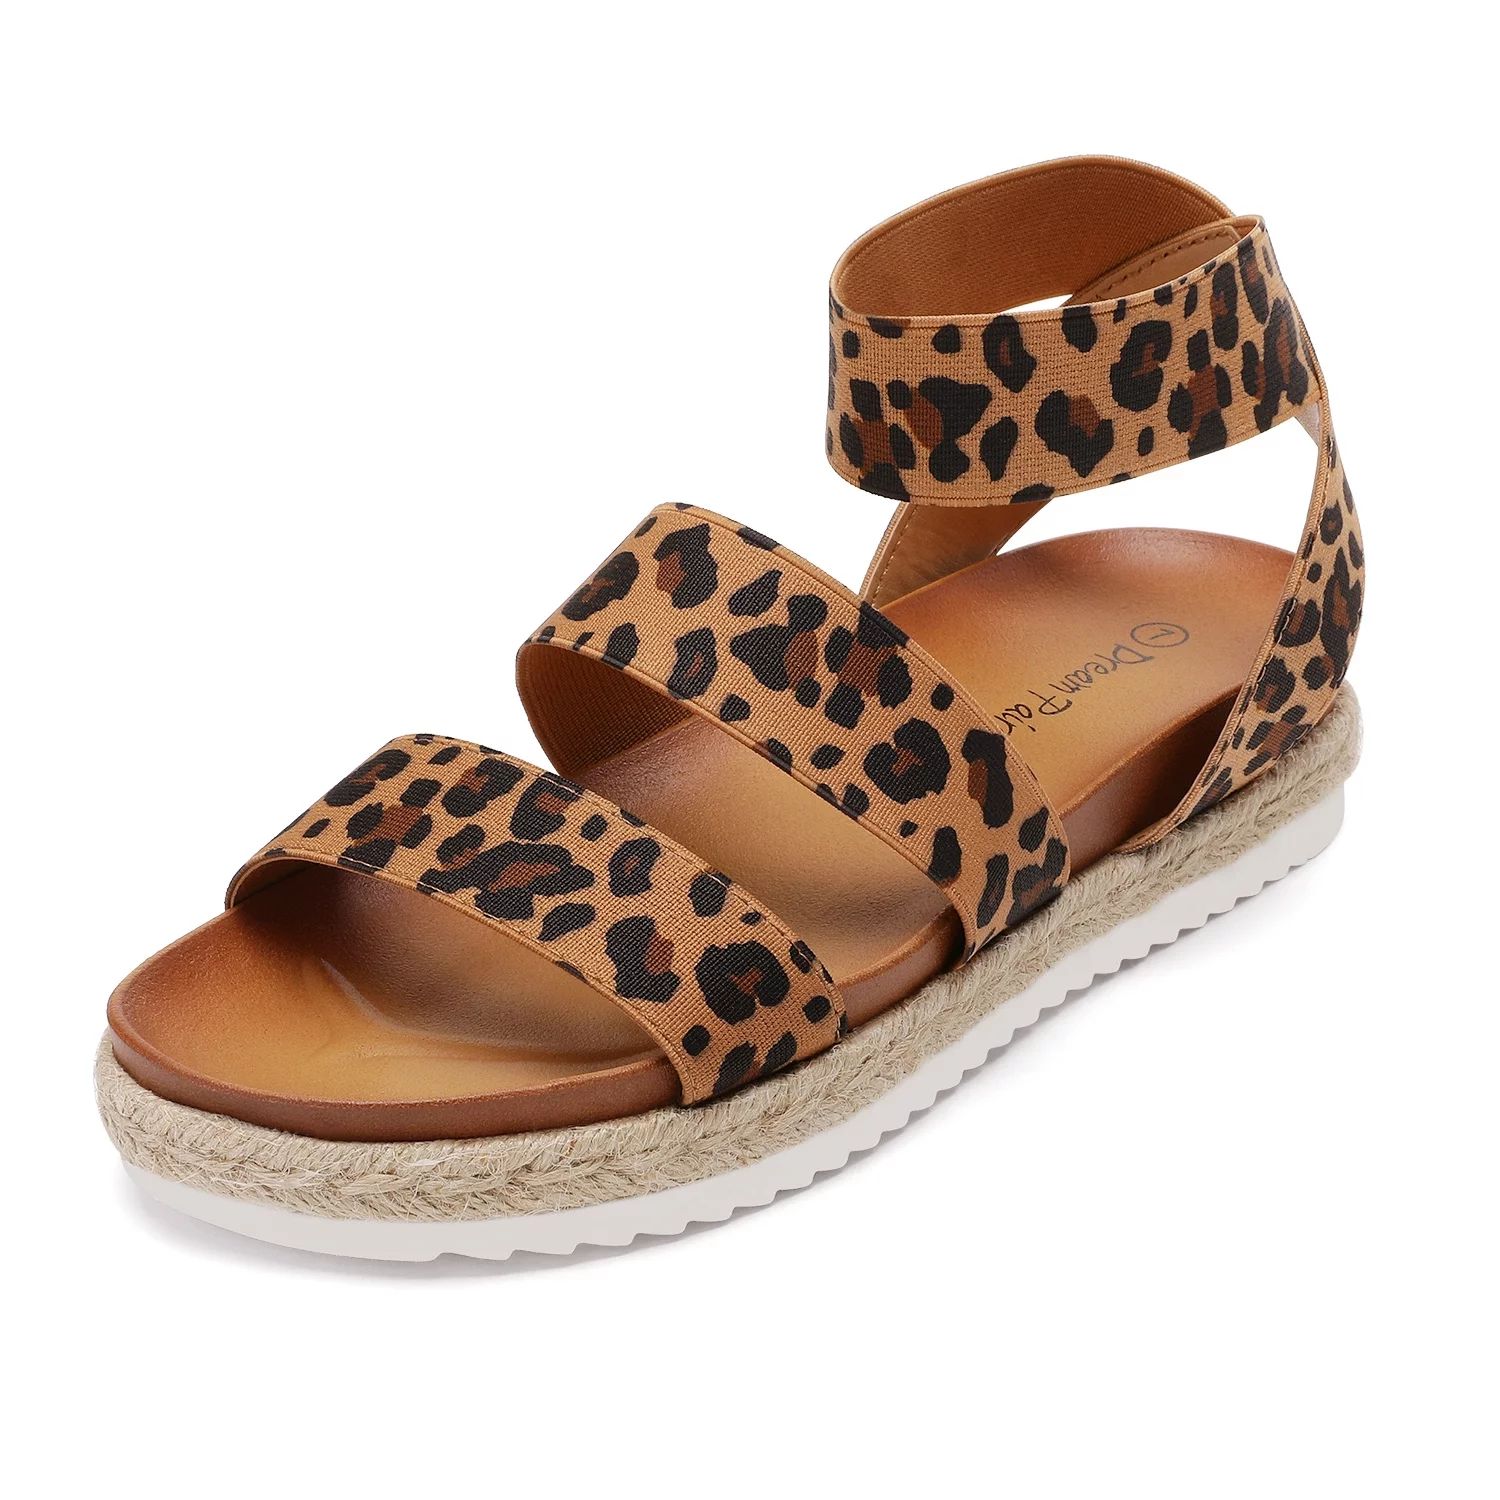 Dream Pairs Women's Platform Wedge Sandals JIMMIE LEOPARD Size 6.5 | Walmart (US)